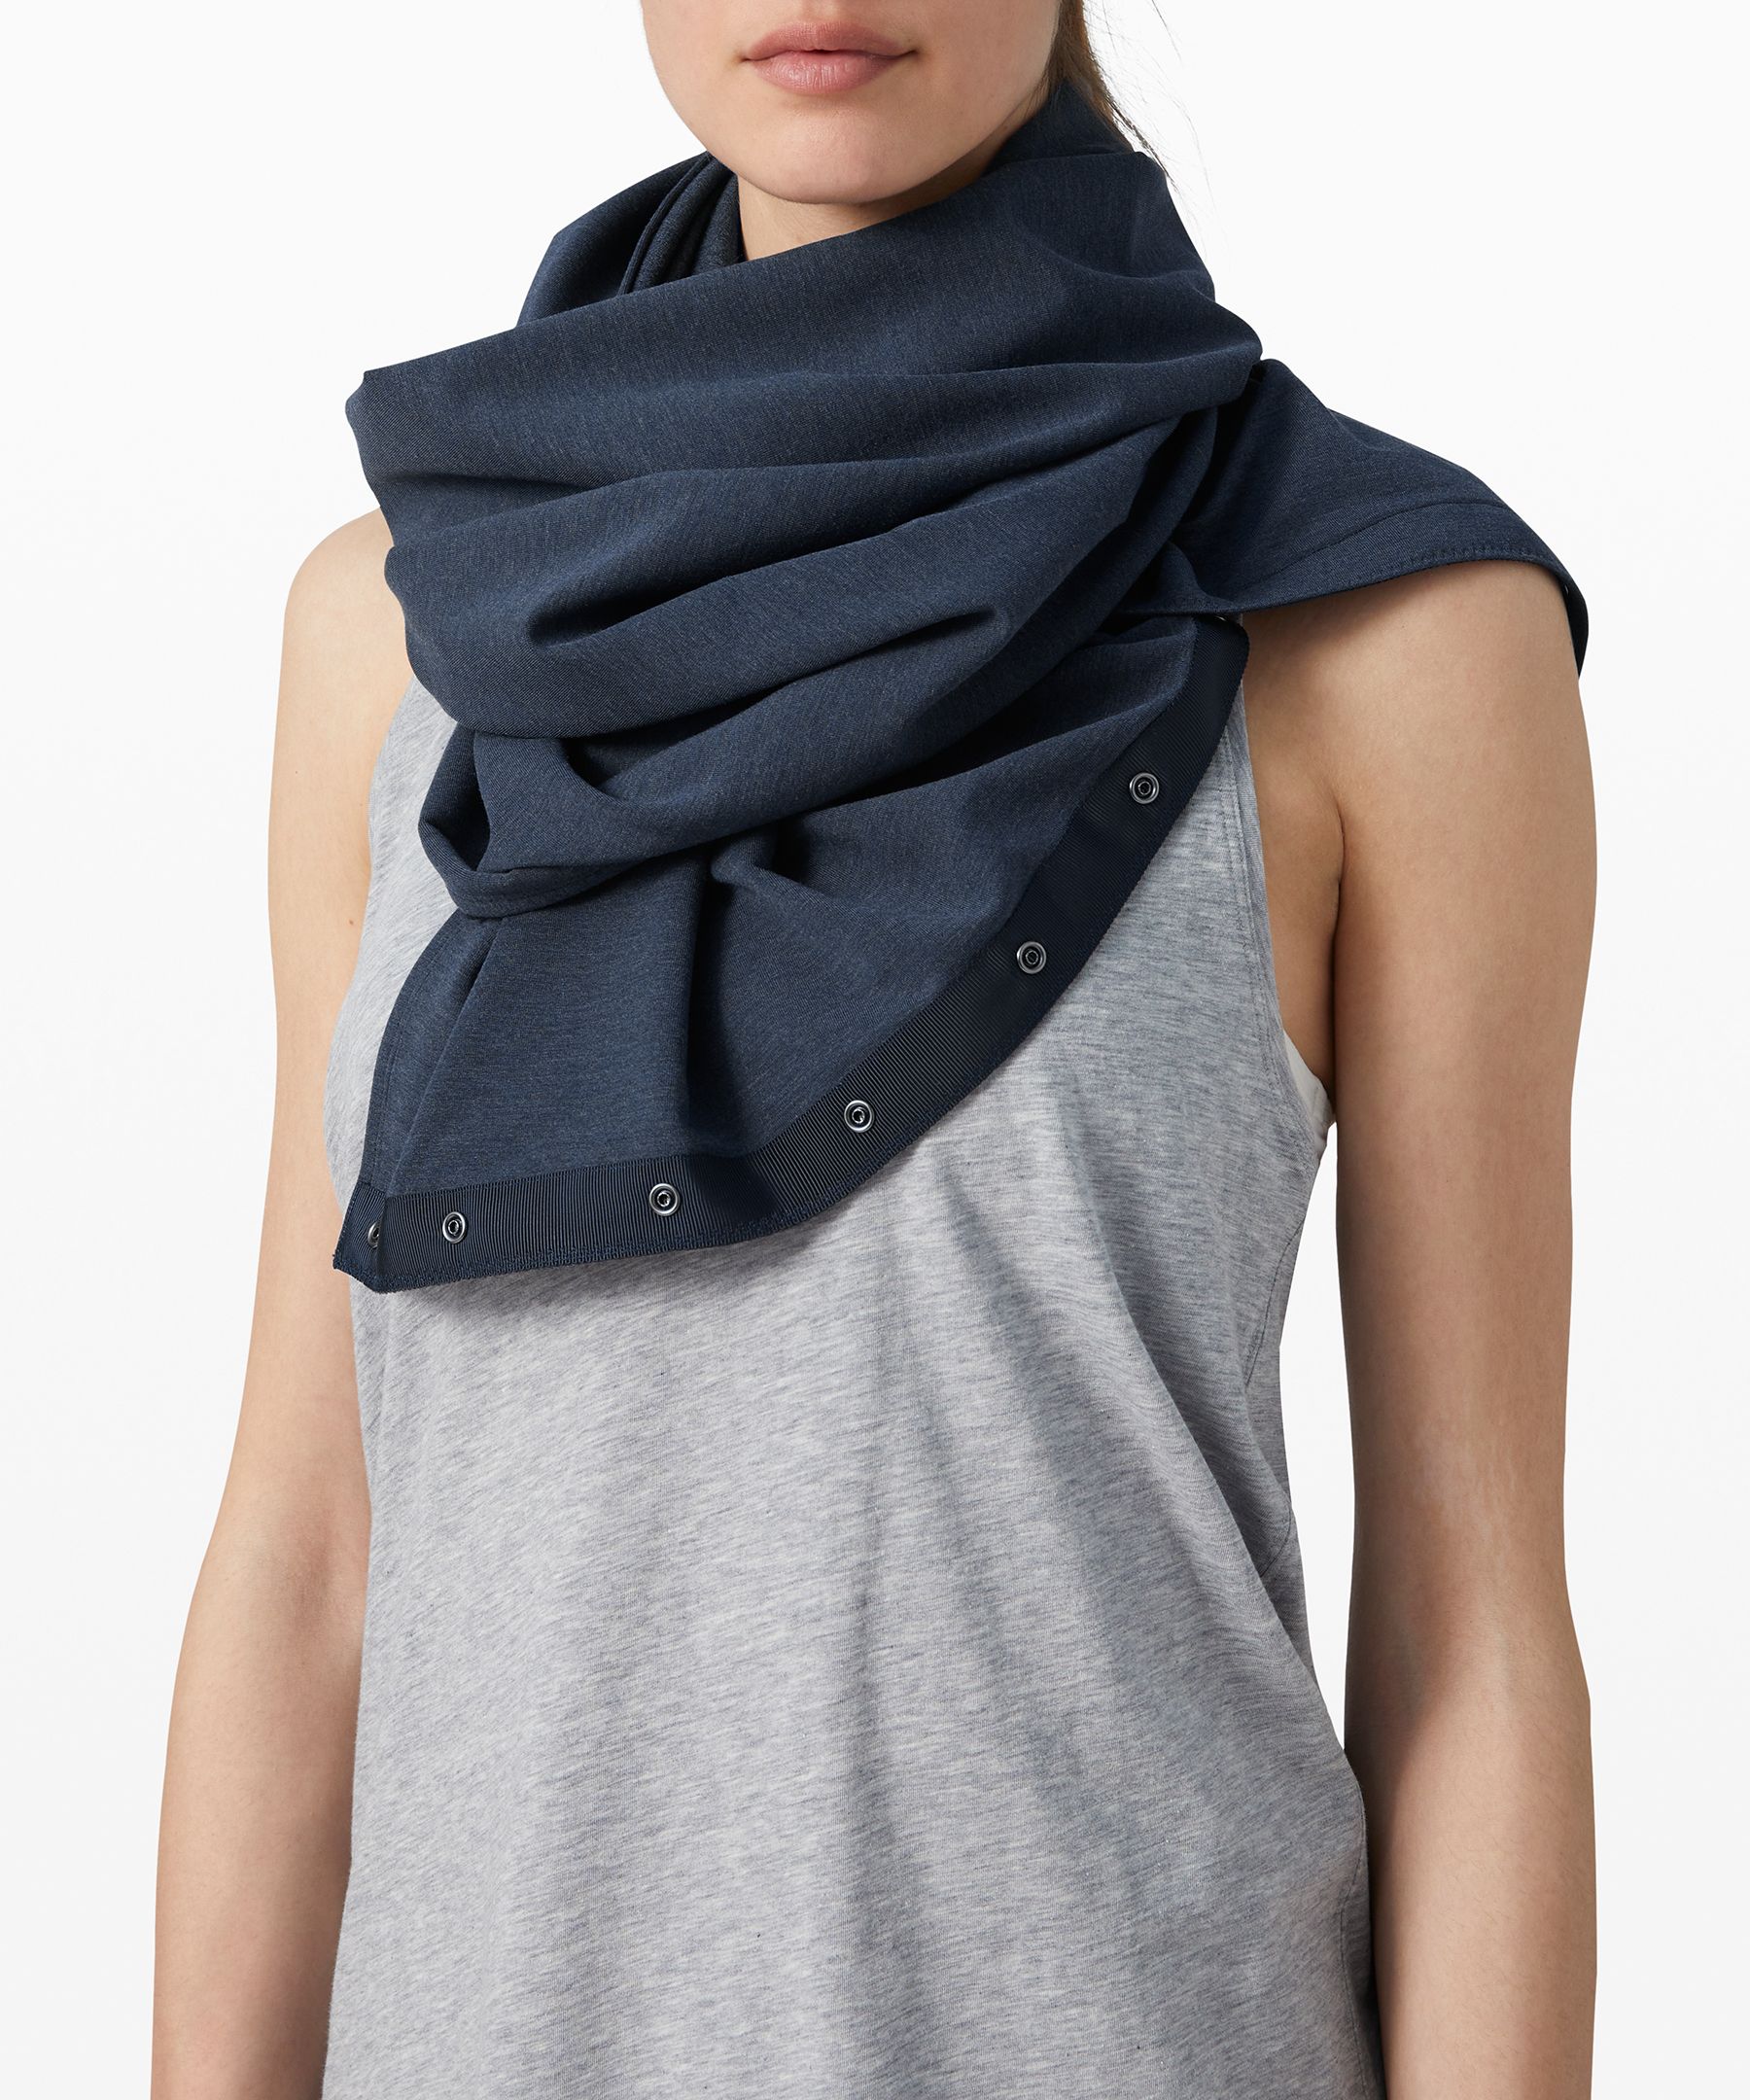 lululemon infinity scarf